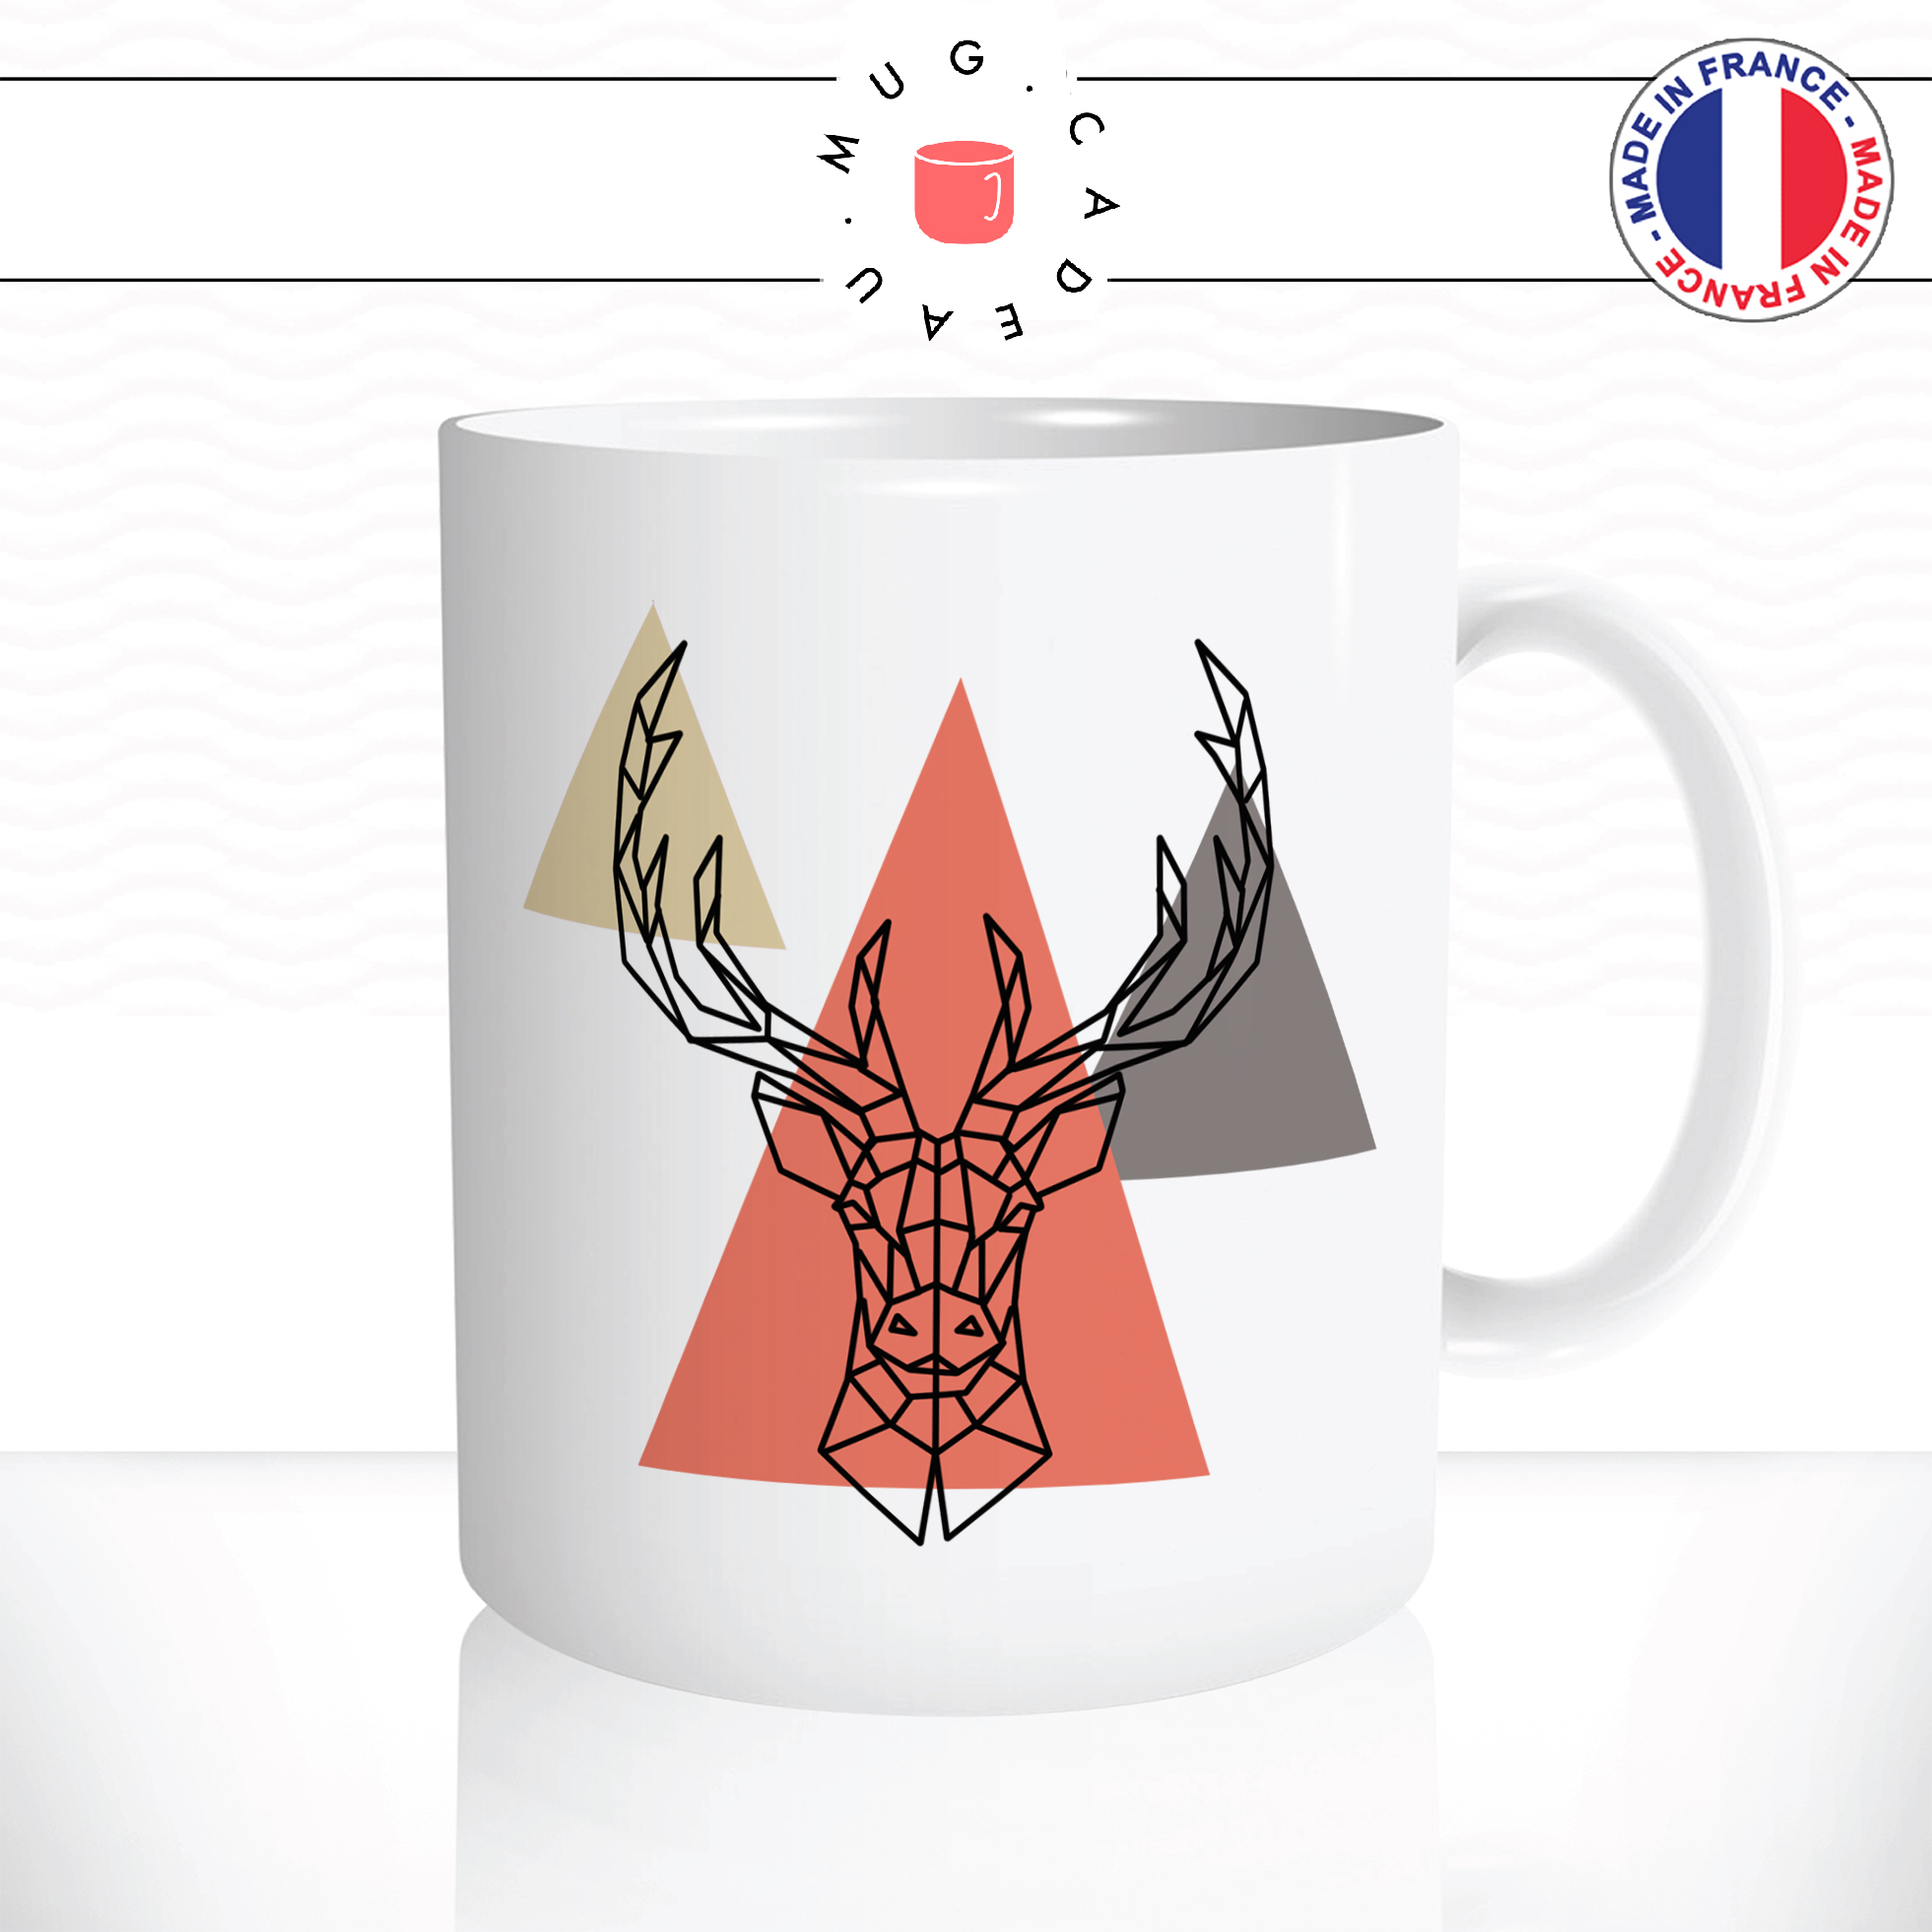 mug-tasse-ref6-cerf-origami-noir-triangles-couleurs-orange-gris-cafe-the-mugs-tasses-personnalise-anse-droite